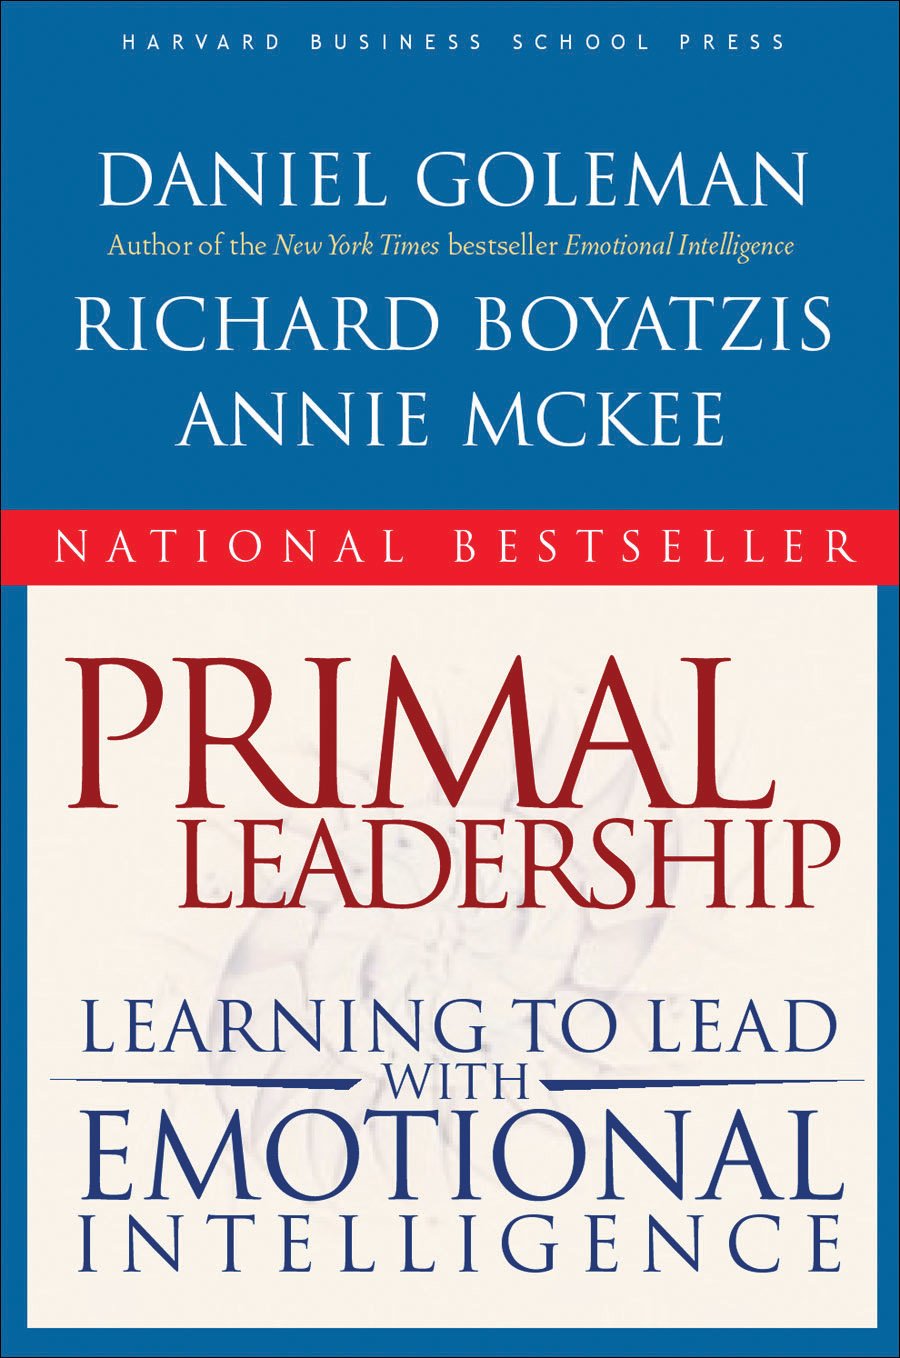 Primal Leadership: Learning to Lead with Emotional Intelligence by Daniel Goleman, Richard Boyatiz, and Annie McKee